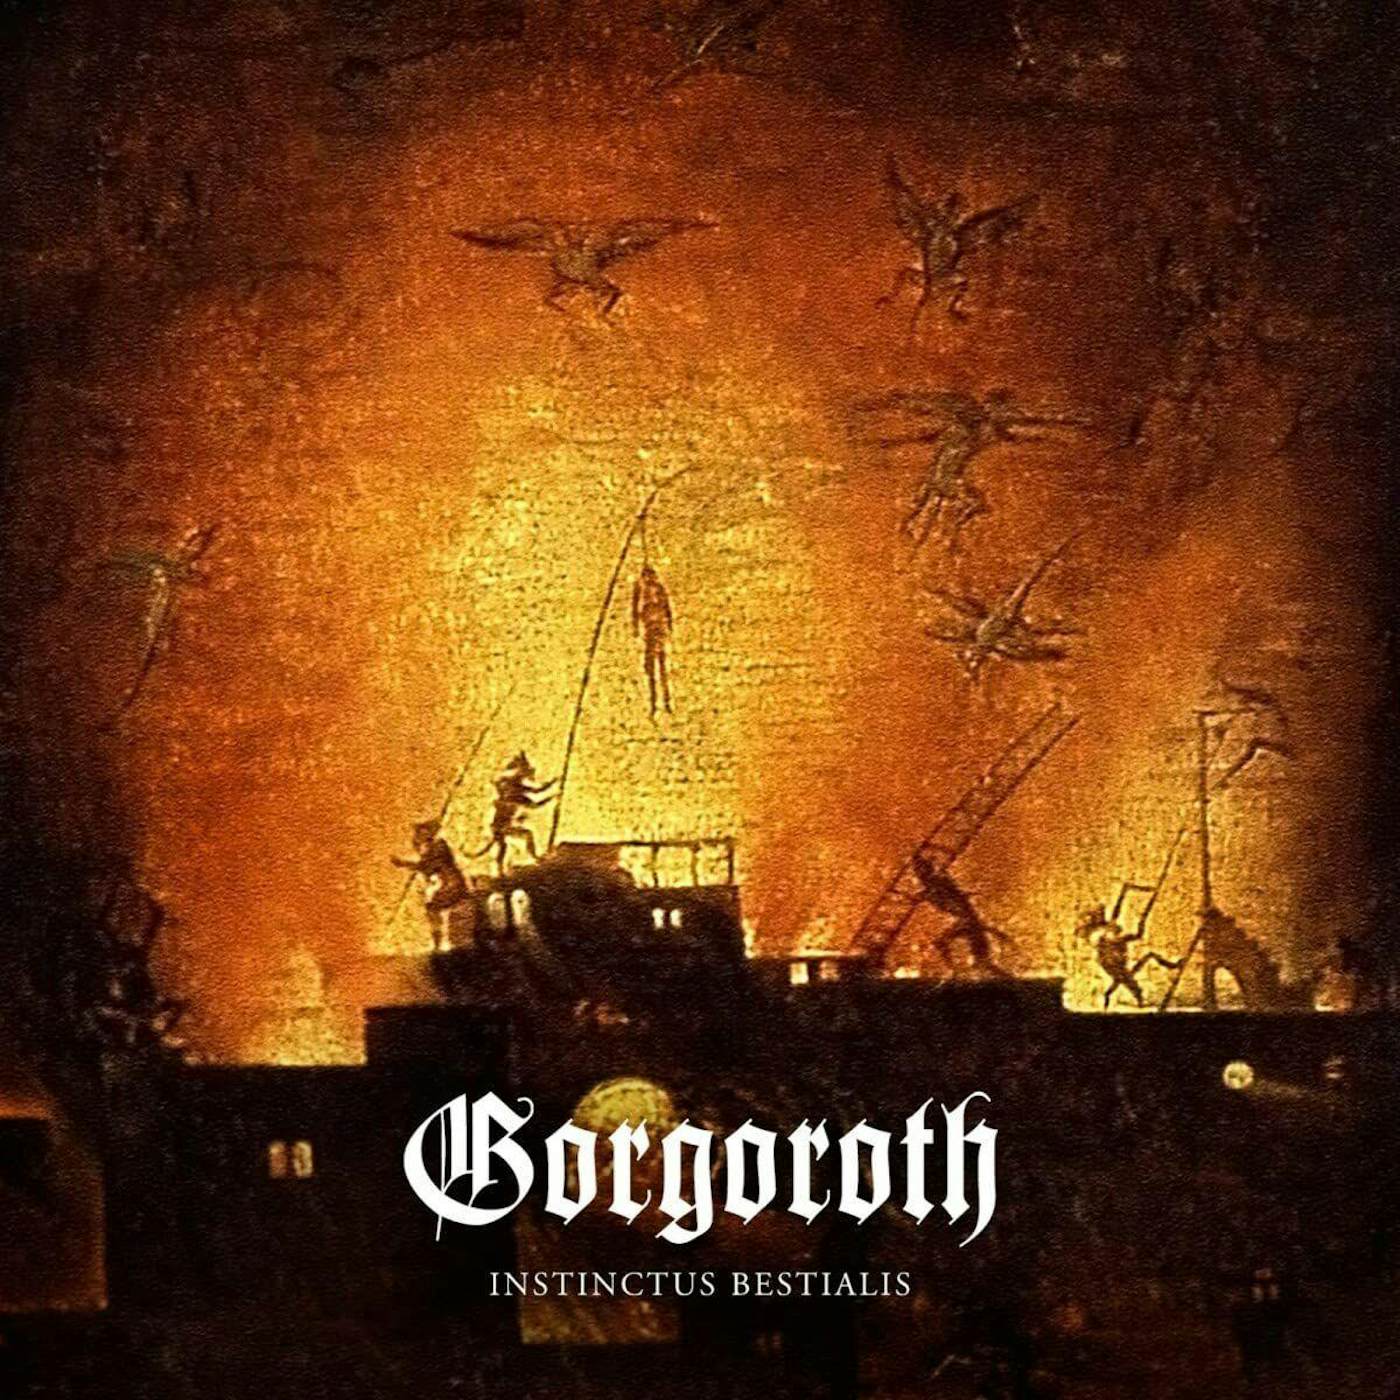 Gorgoroth Instinctus Bestialis (Orange/Black Marble) Vinyl Record